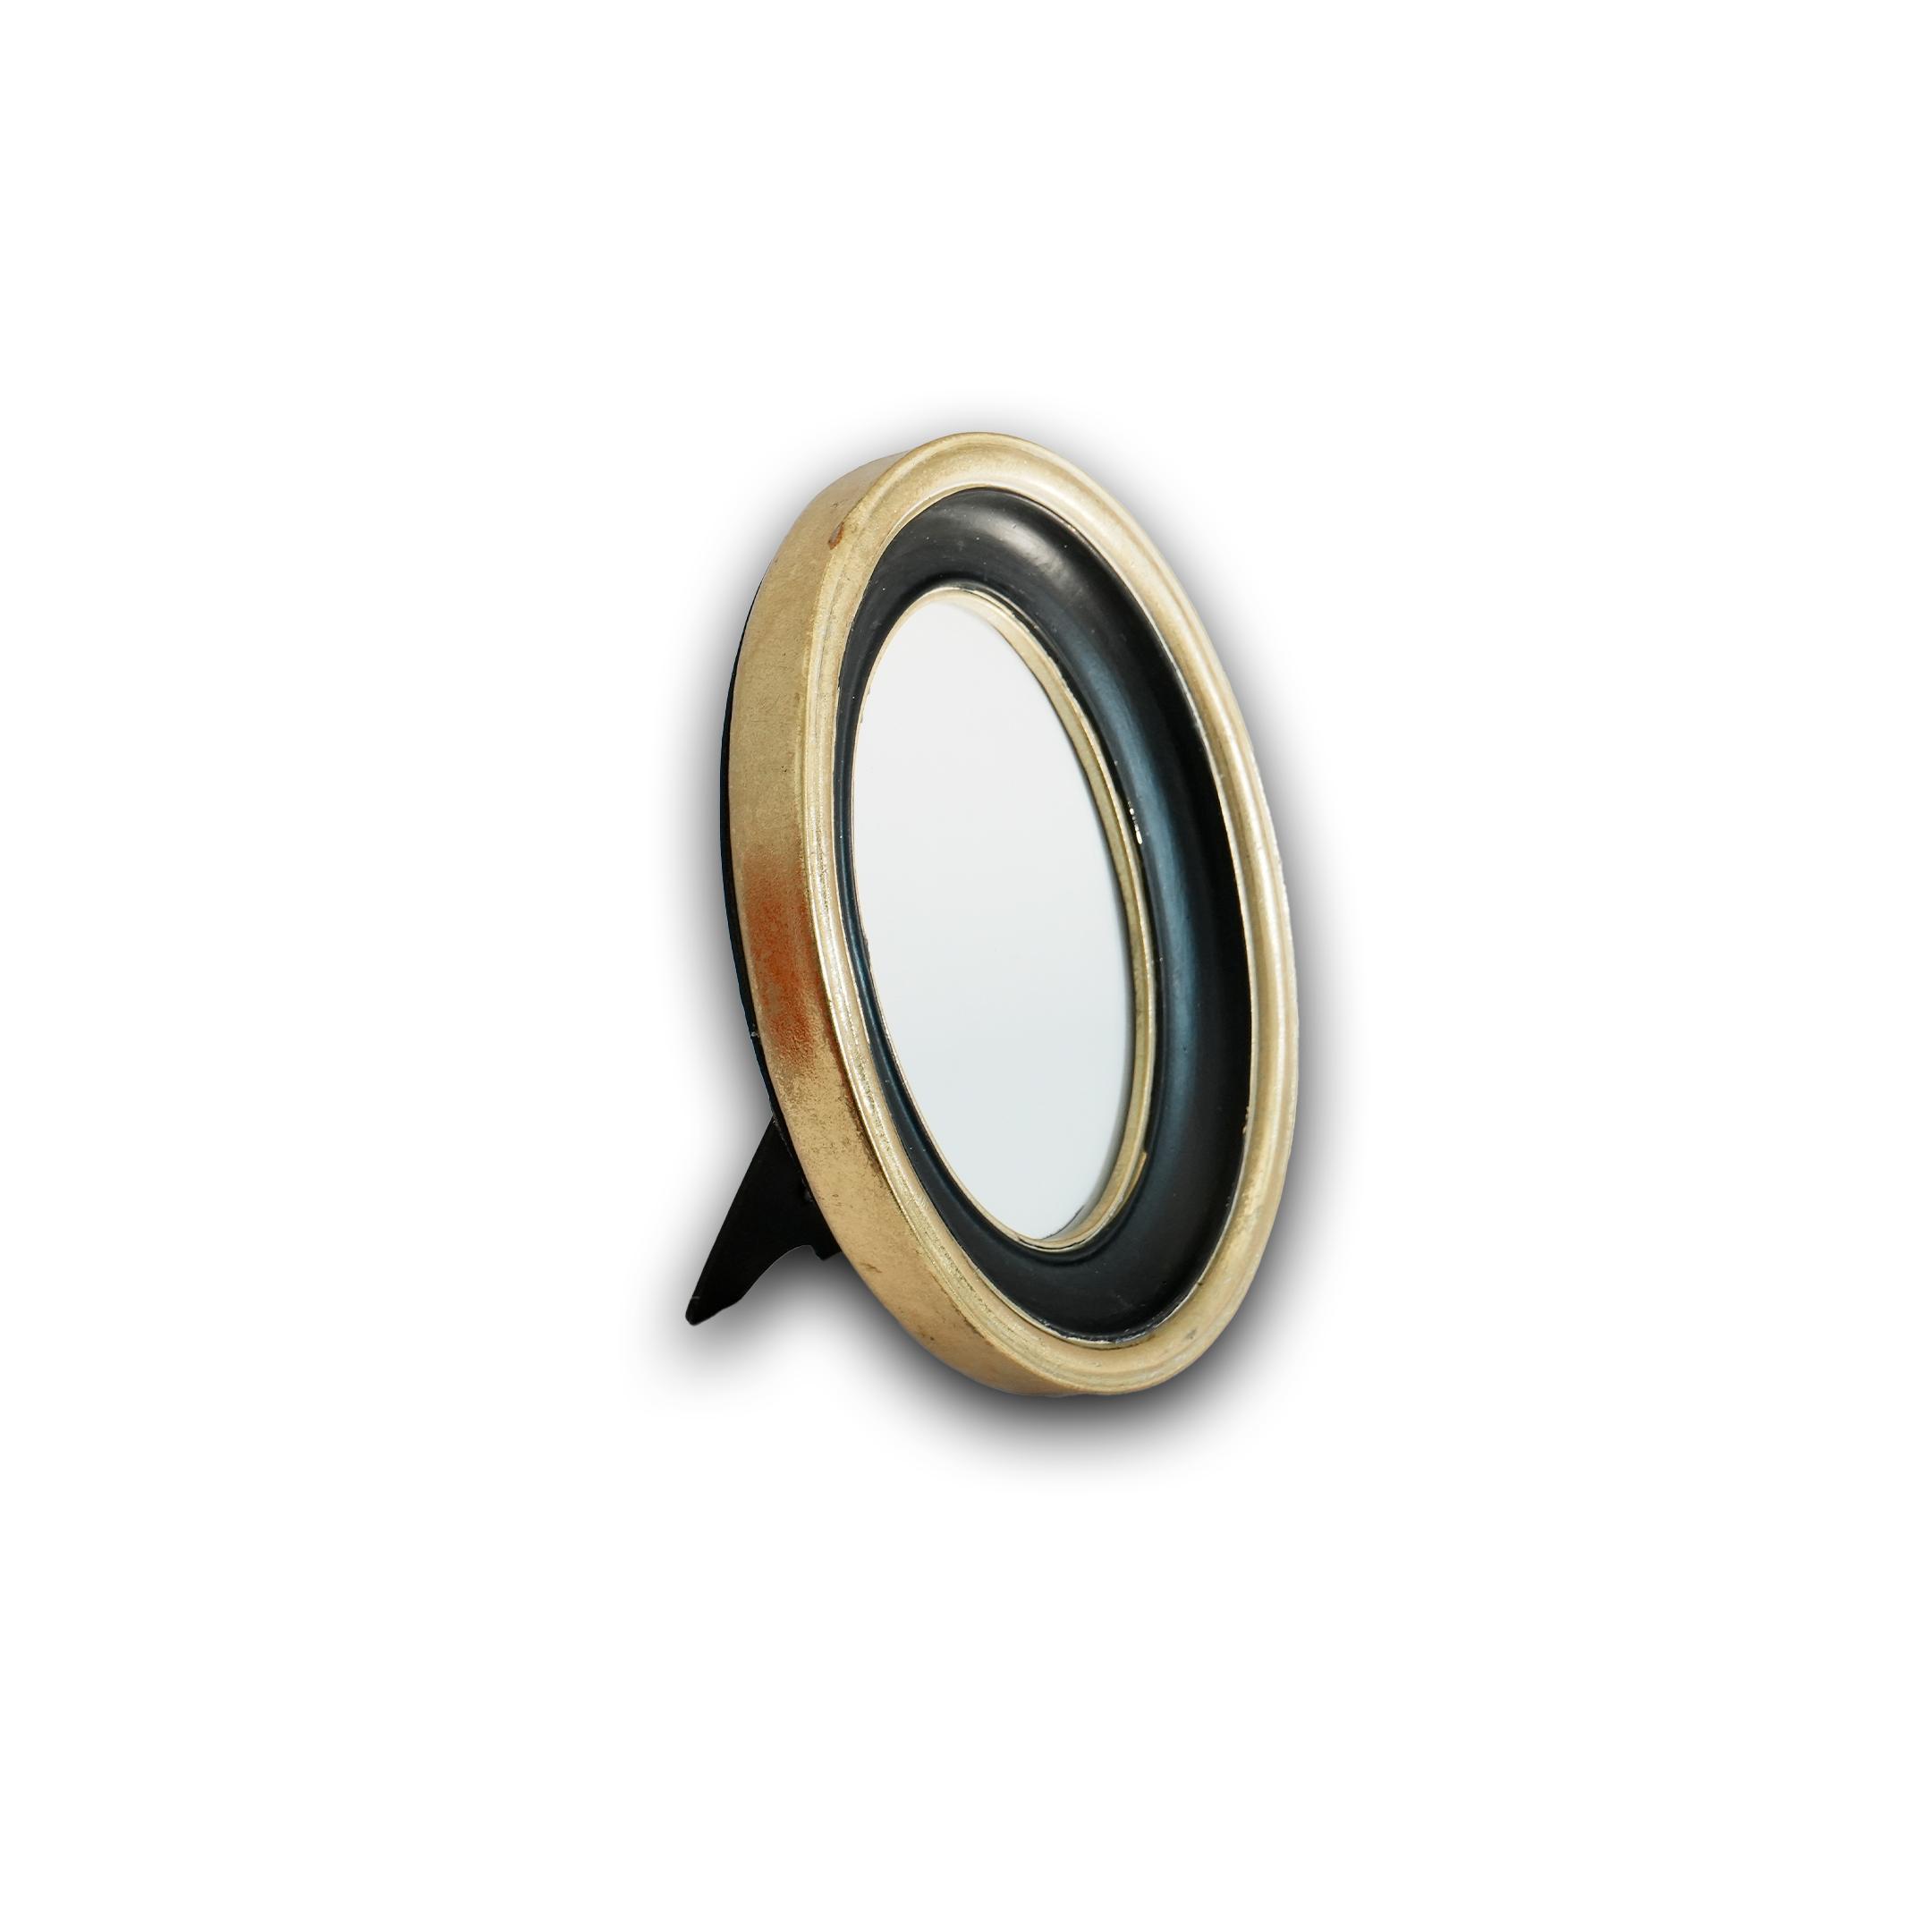 Portafoto ovale Arpimex ovale color oro 16cm x 20,7cm x 3cm